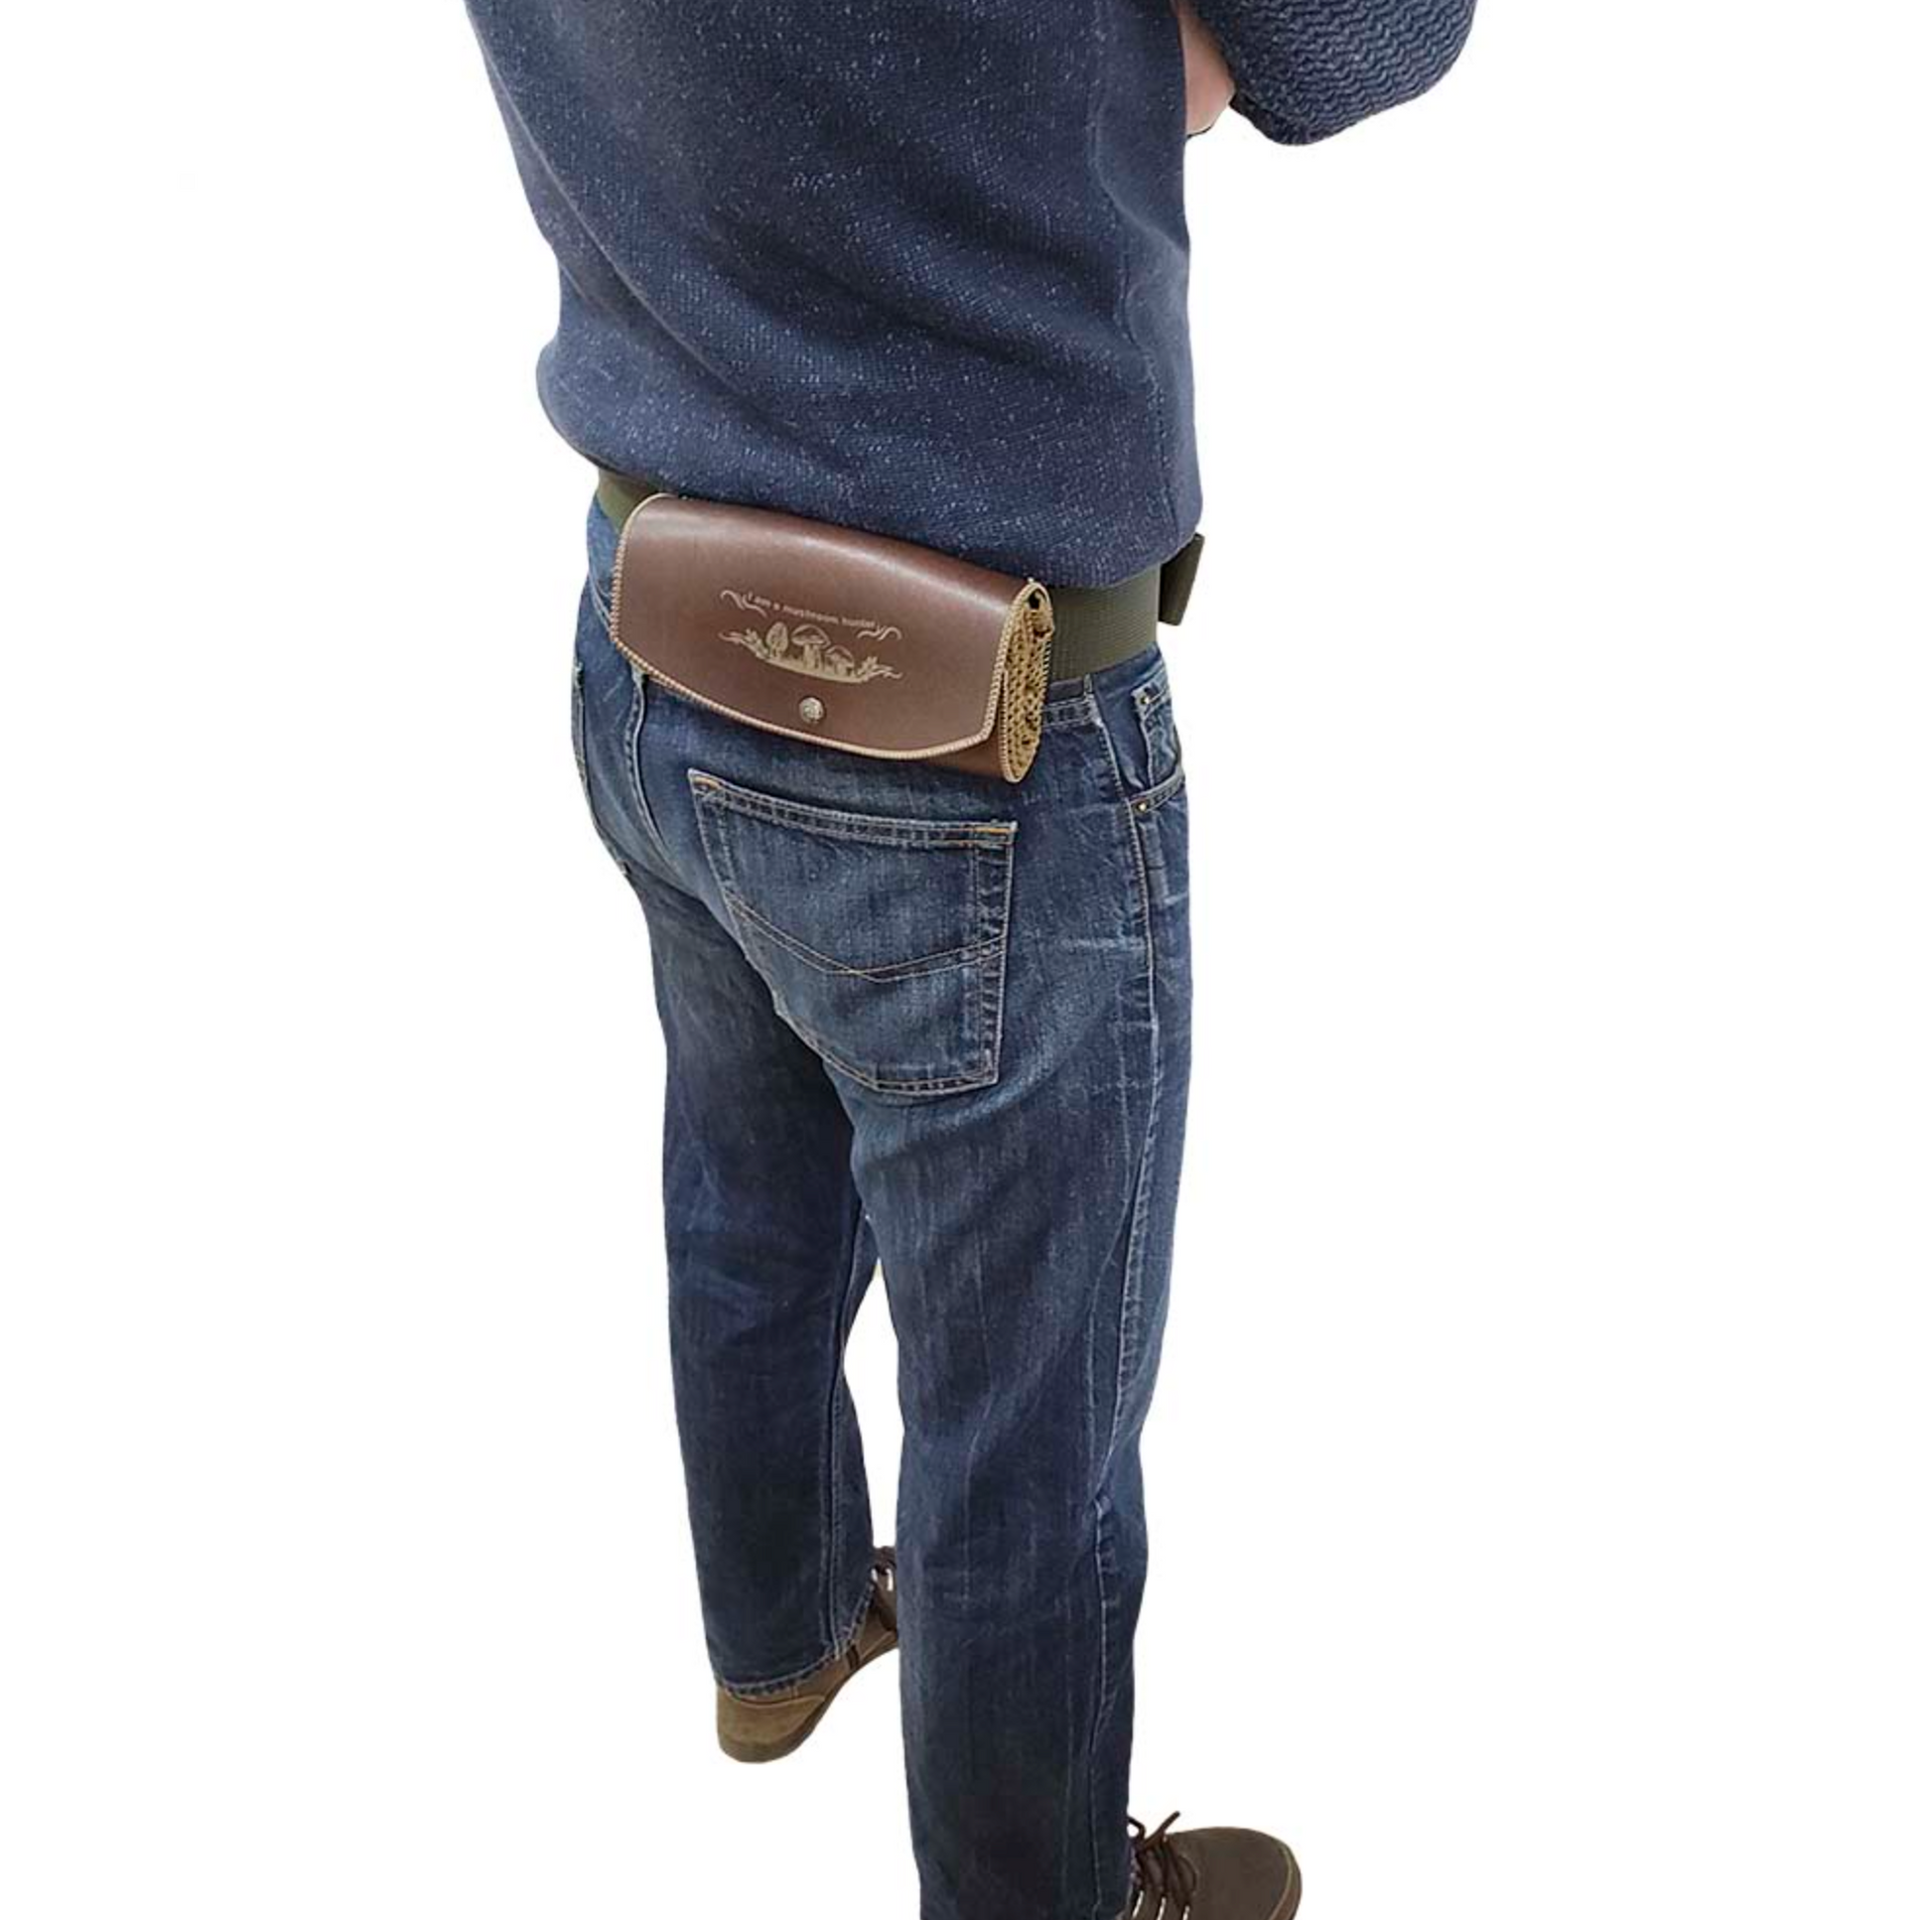 Pocket Belt or Fanny Pack Extender to Use With Forage Design